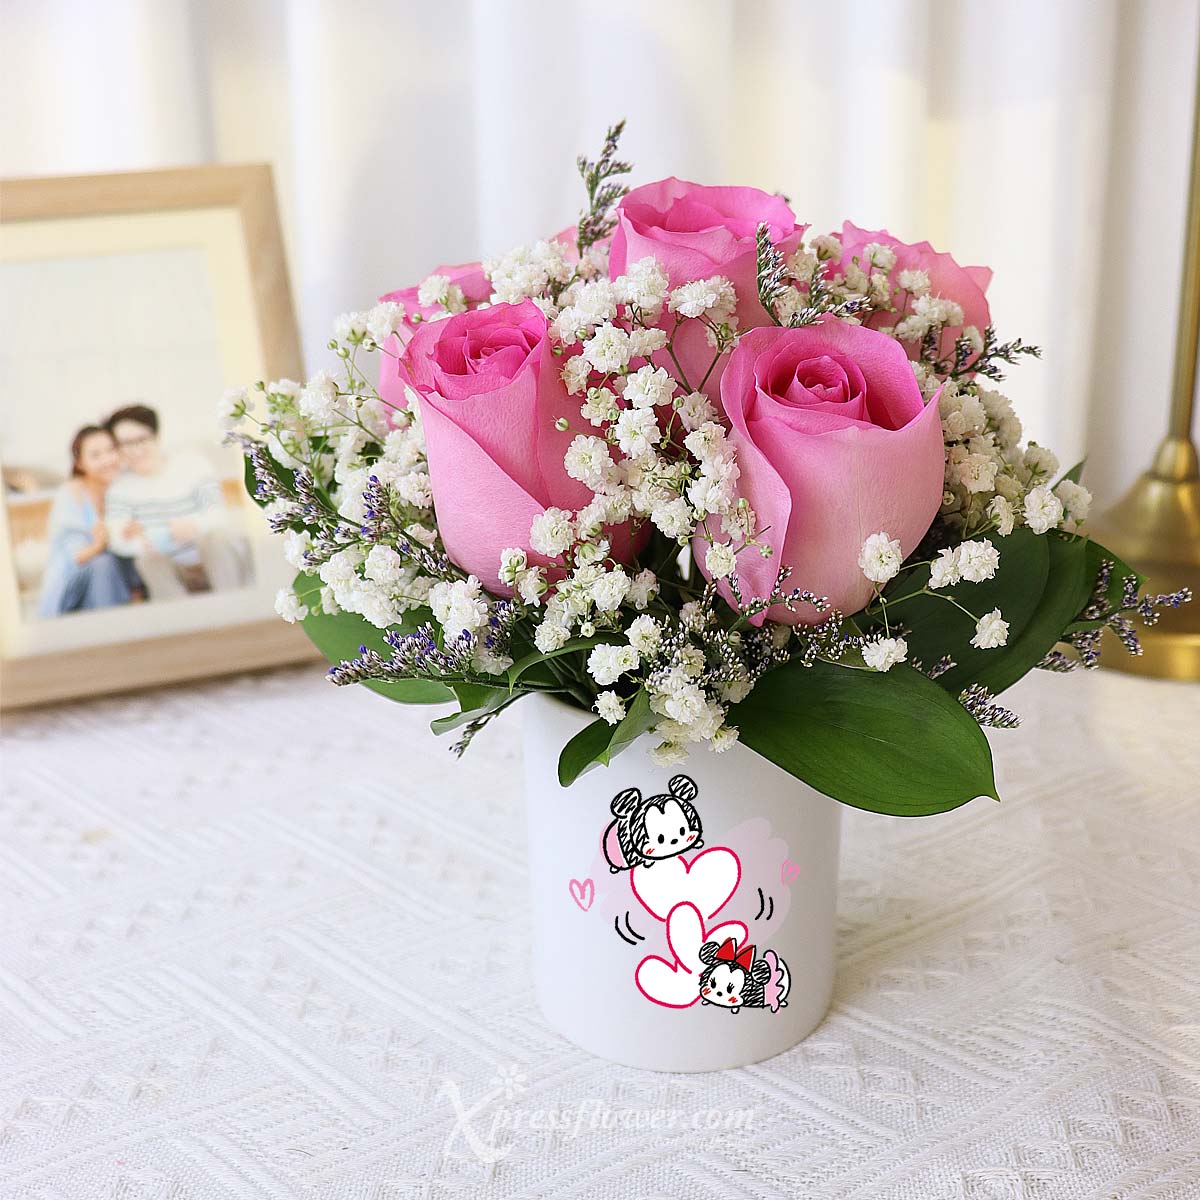 DSAR2302 Passionate Couplegenix (6 Dark pink Roses Disney Flower Arrangement) 3a